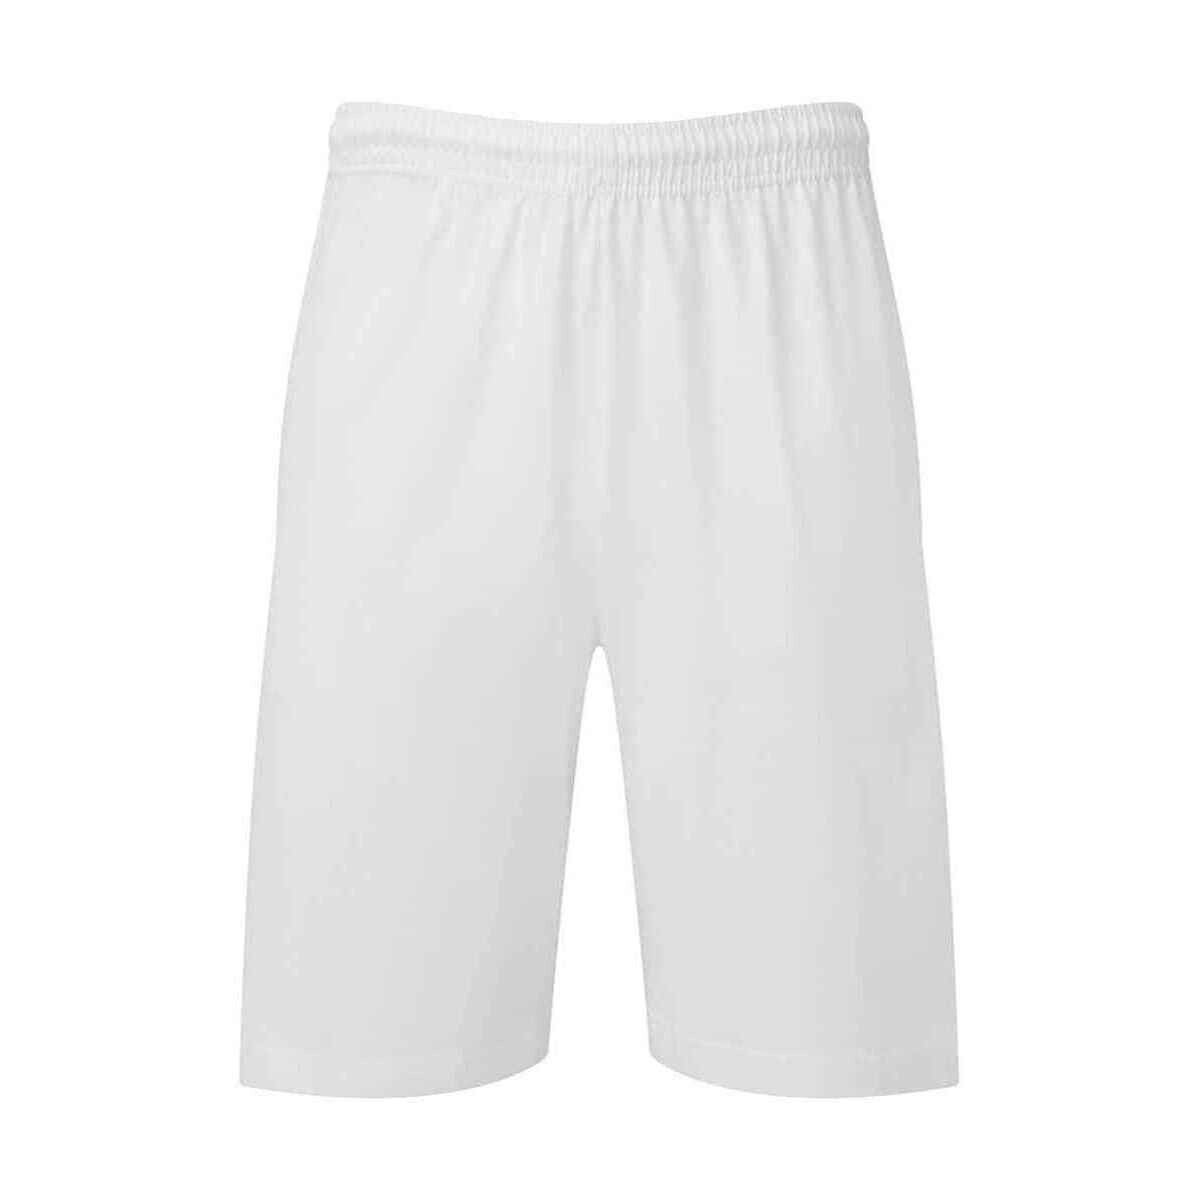 Vêtements Homme Shorts / Bermudas Fruit Of The Loom Iconic Blanc